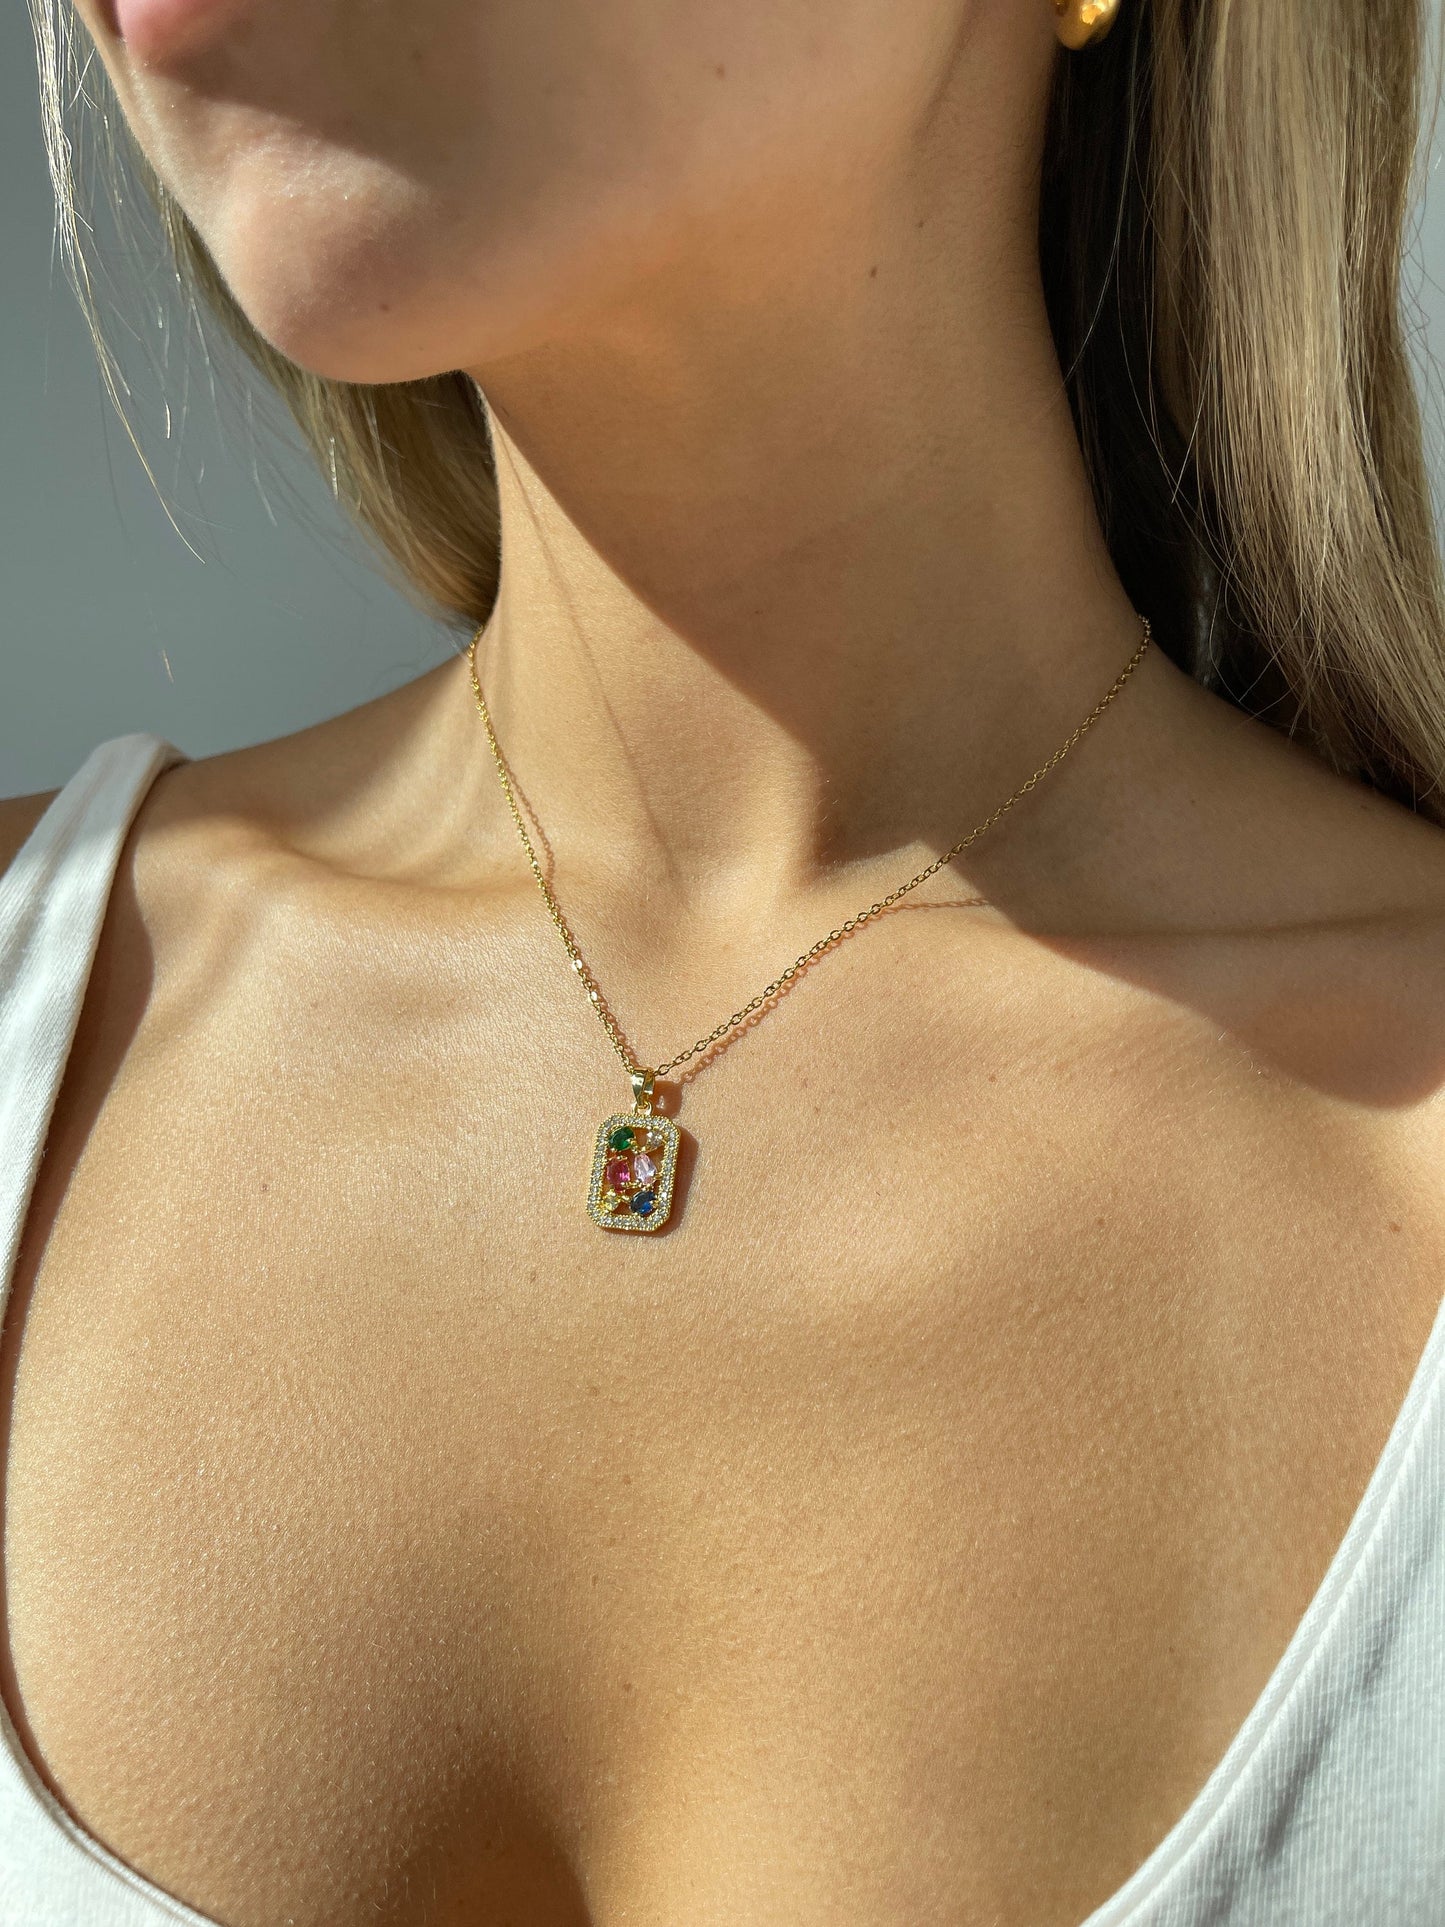 Irregular Gemstone Necklace, colorful stone necklace, minimalist square pendant, square gold pendant, pendant necklace layering, gemstone